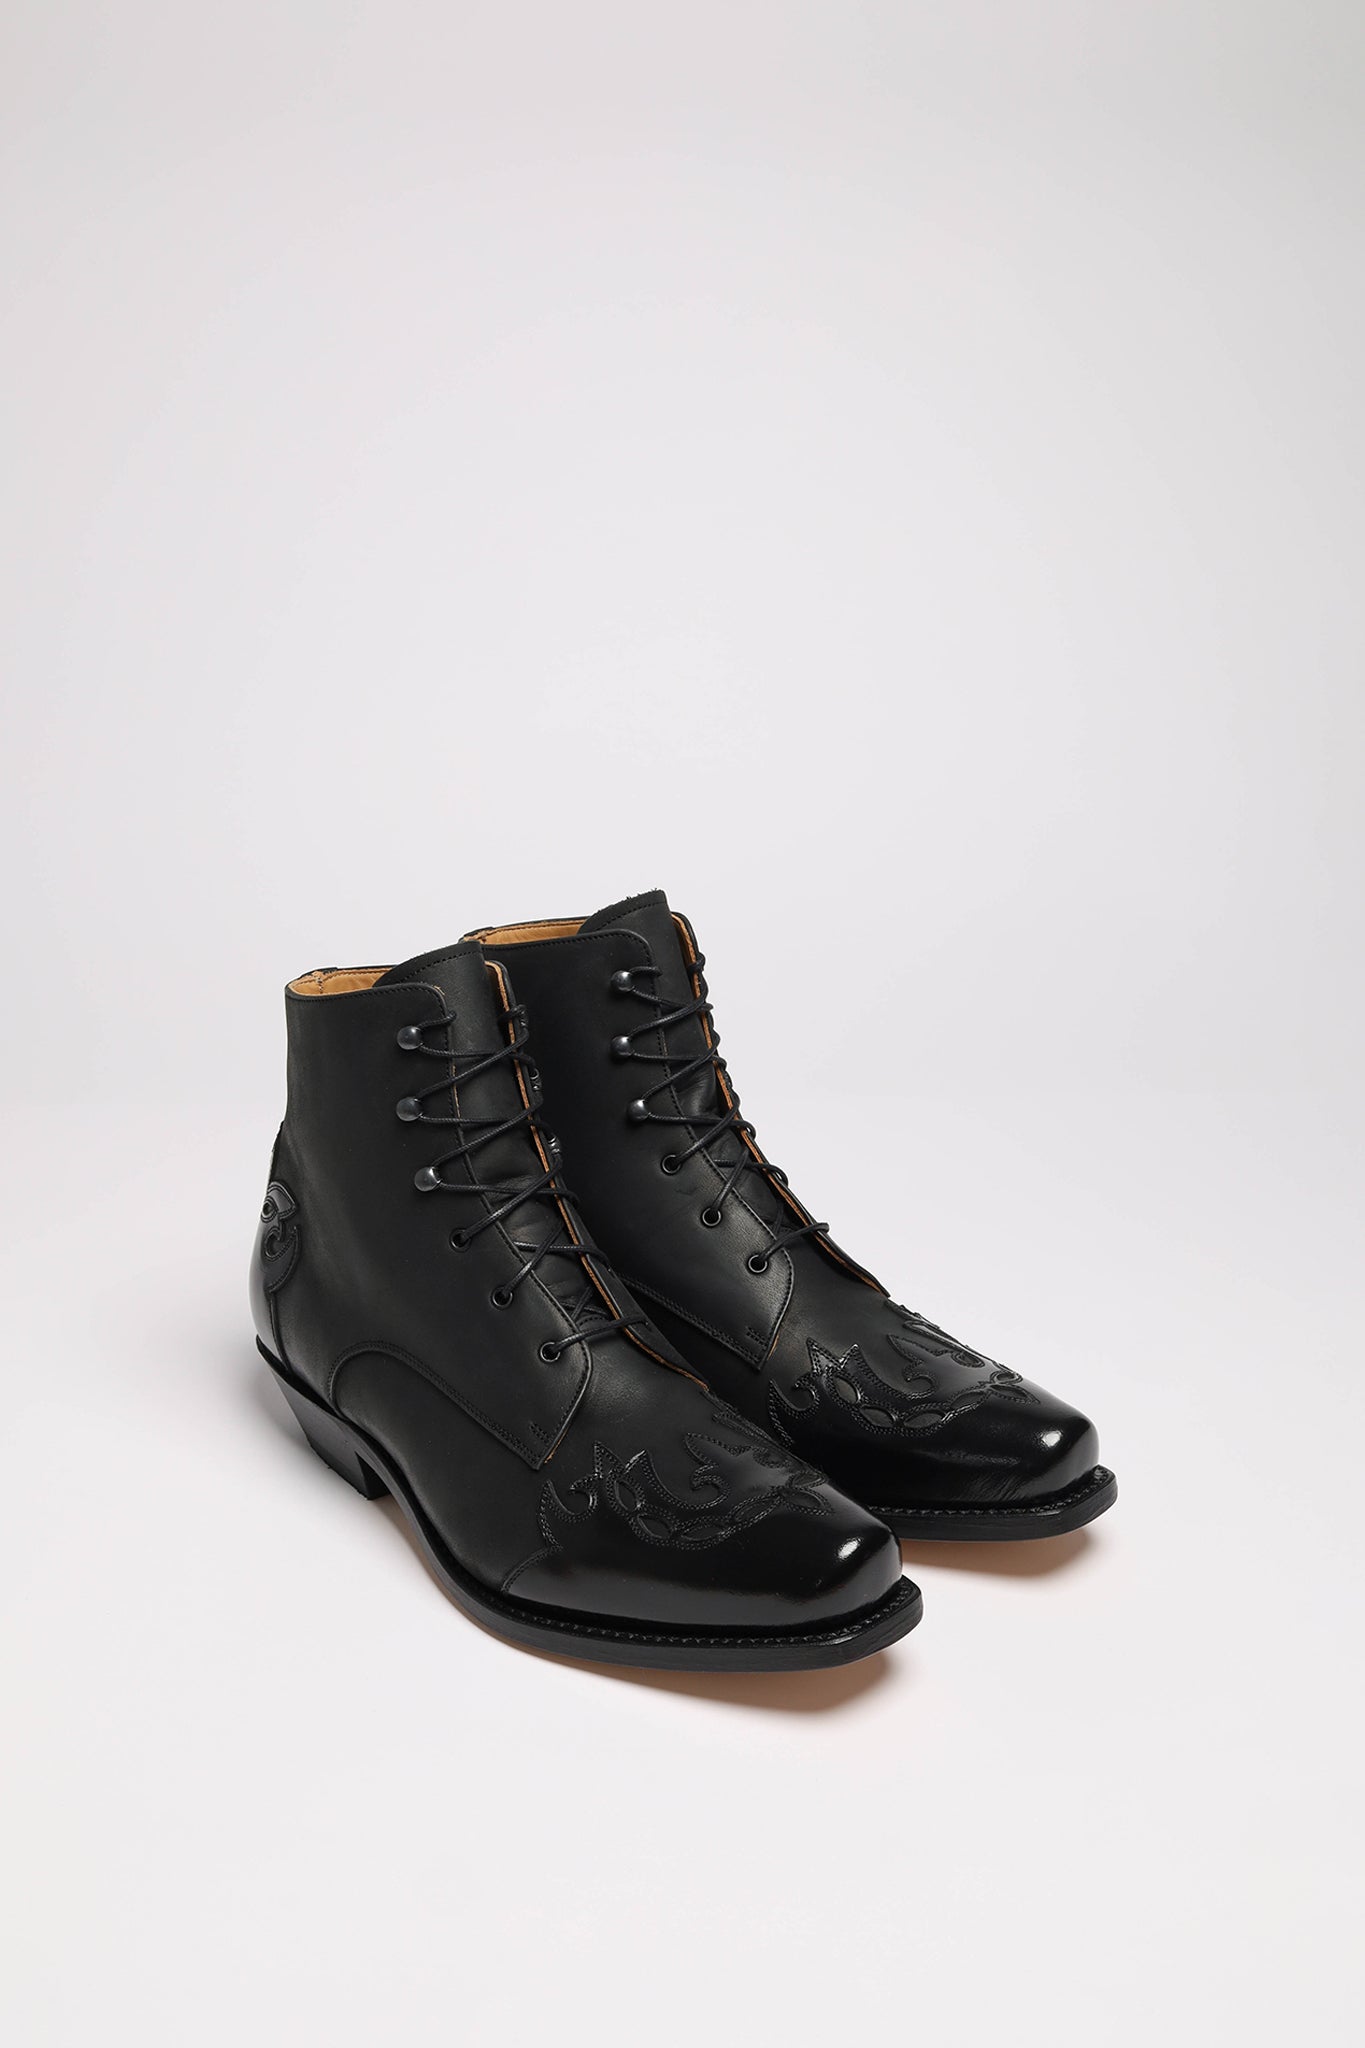 FB Fashion Boots 2654 M-26 Oil Florentic Negro Sprinter Negro